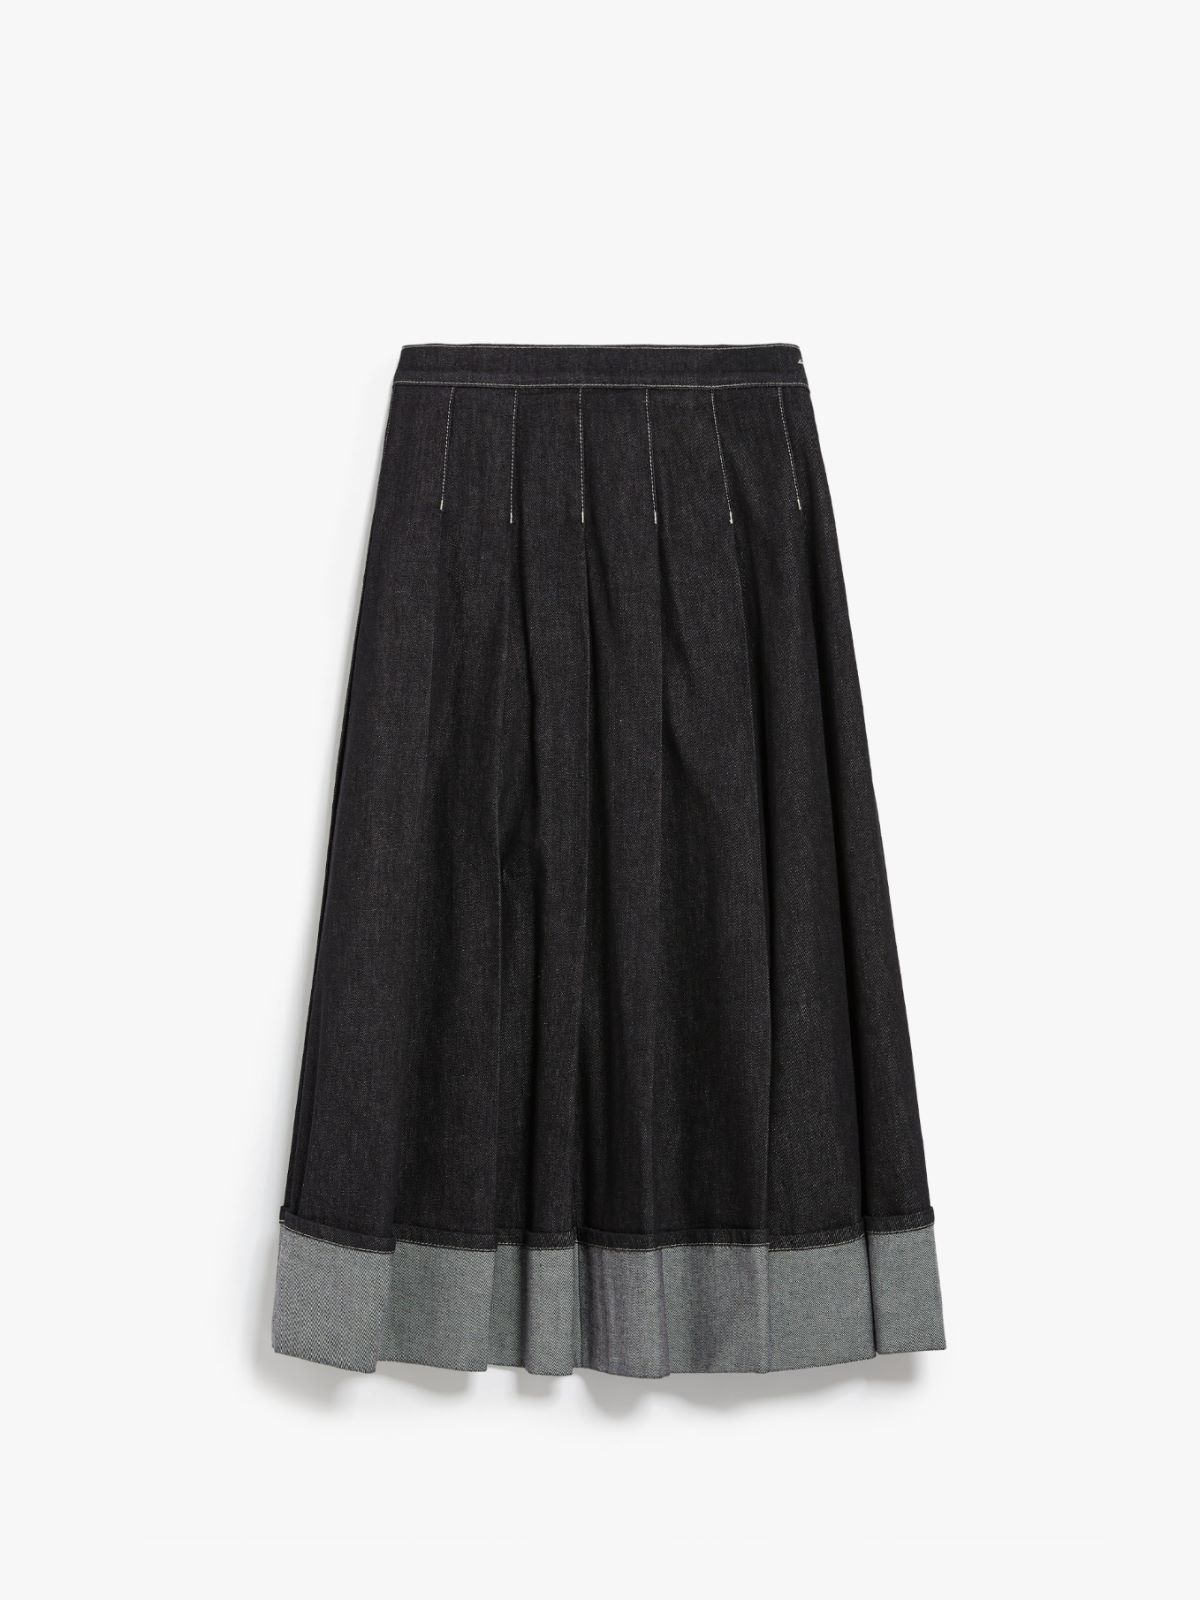 Cotton denim skirt - BLACK - Weekend Max Mara - 5